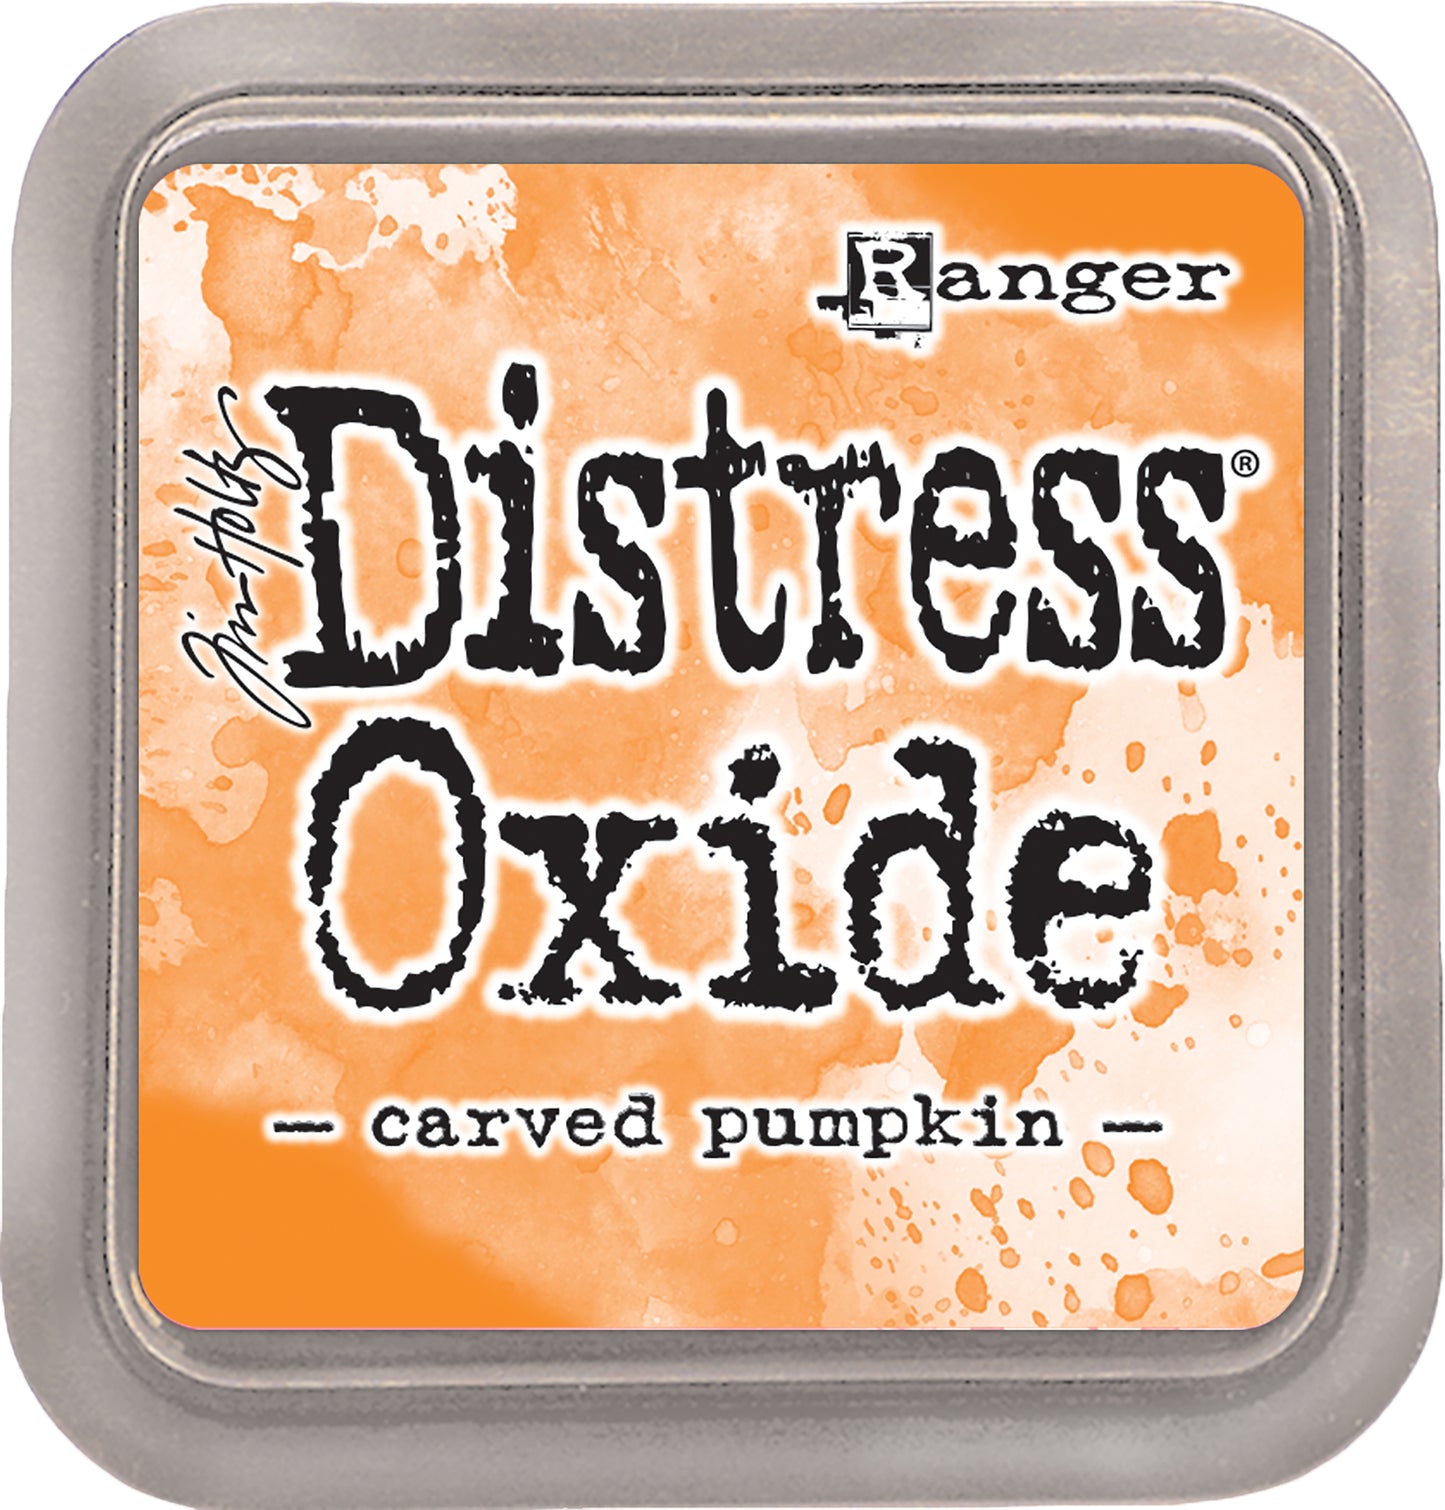 Carved Pumpkin Distress Oxide